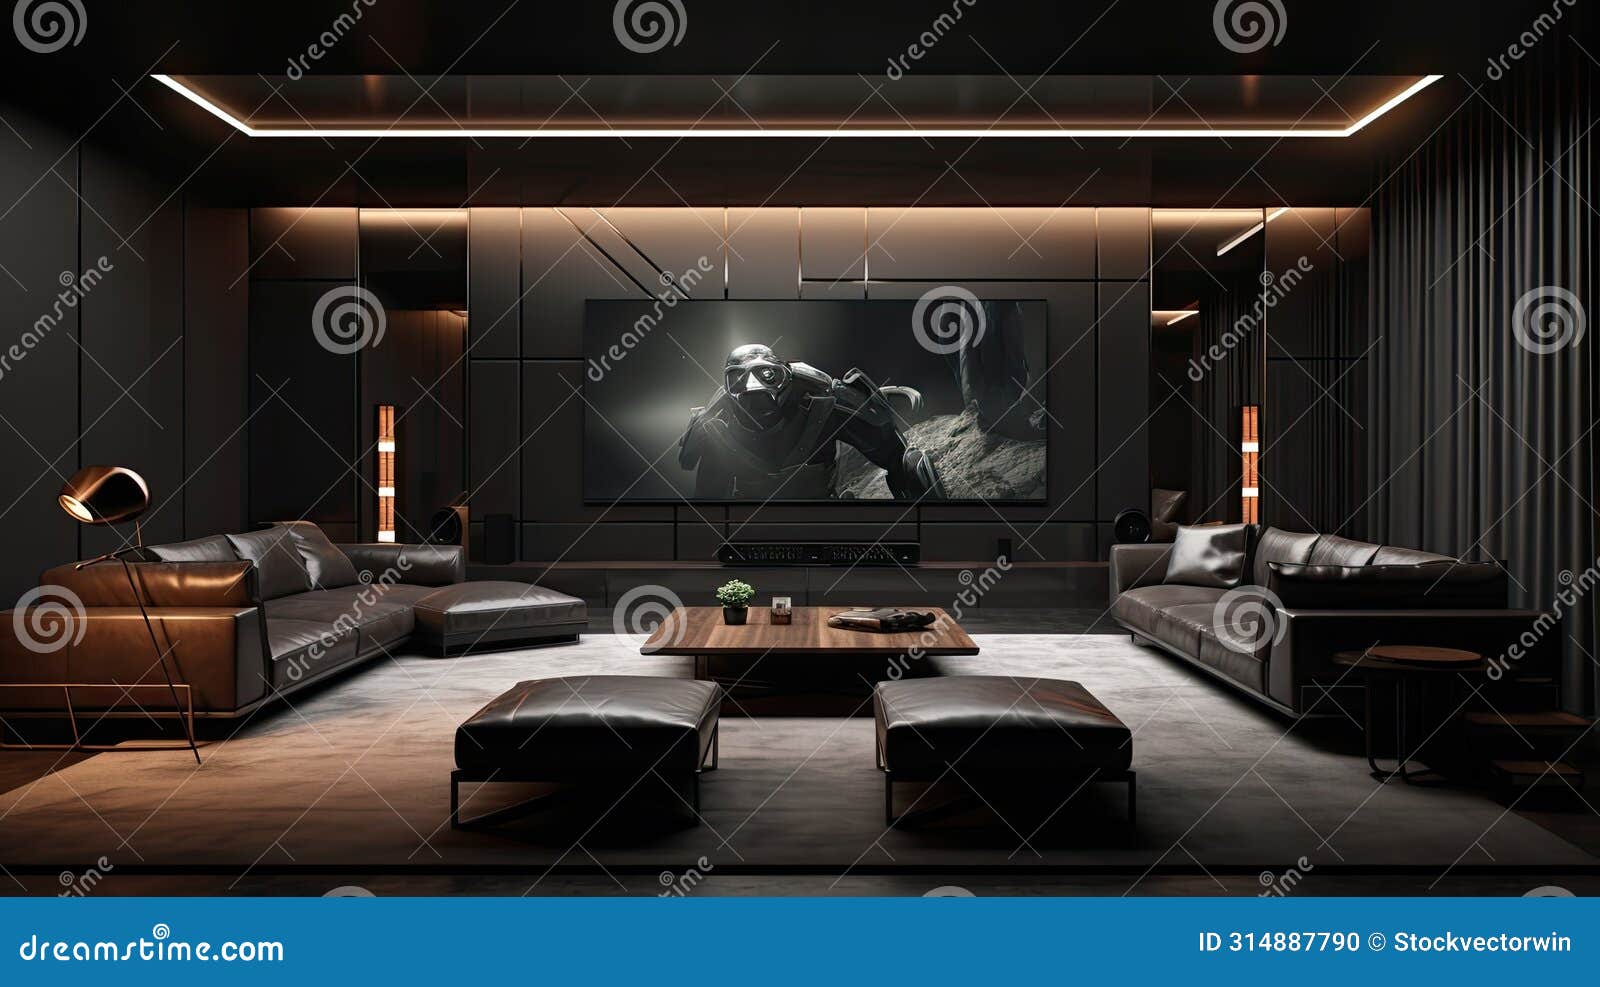 immersive tv dark room